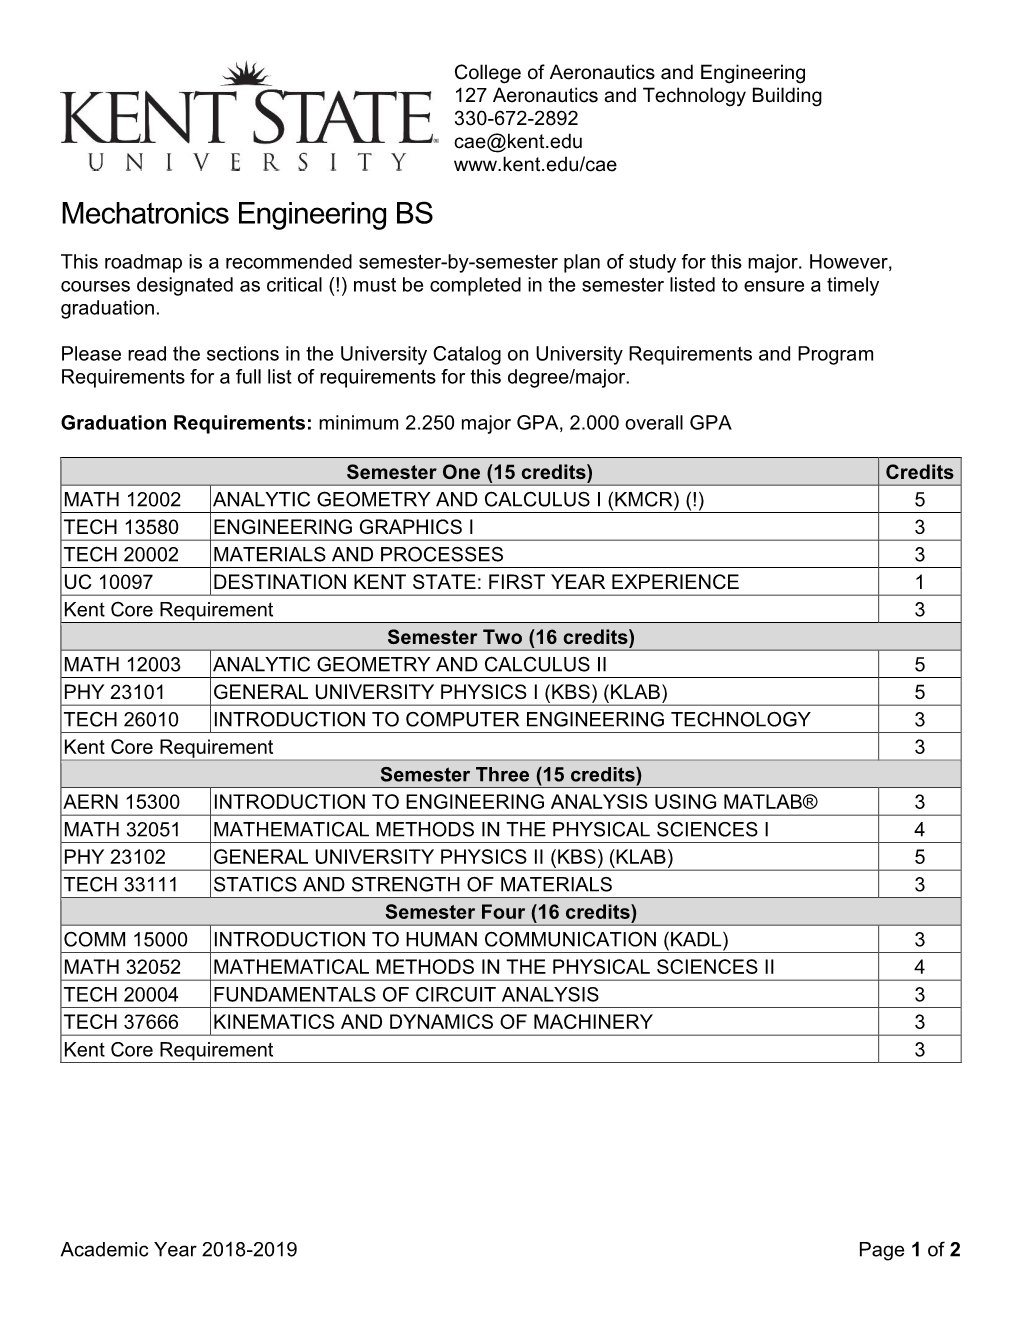 Roadmap Mechatronics Engineering BS